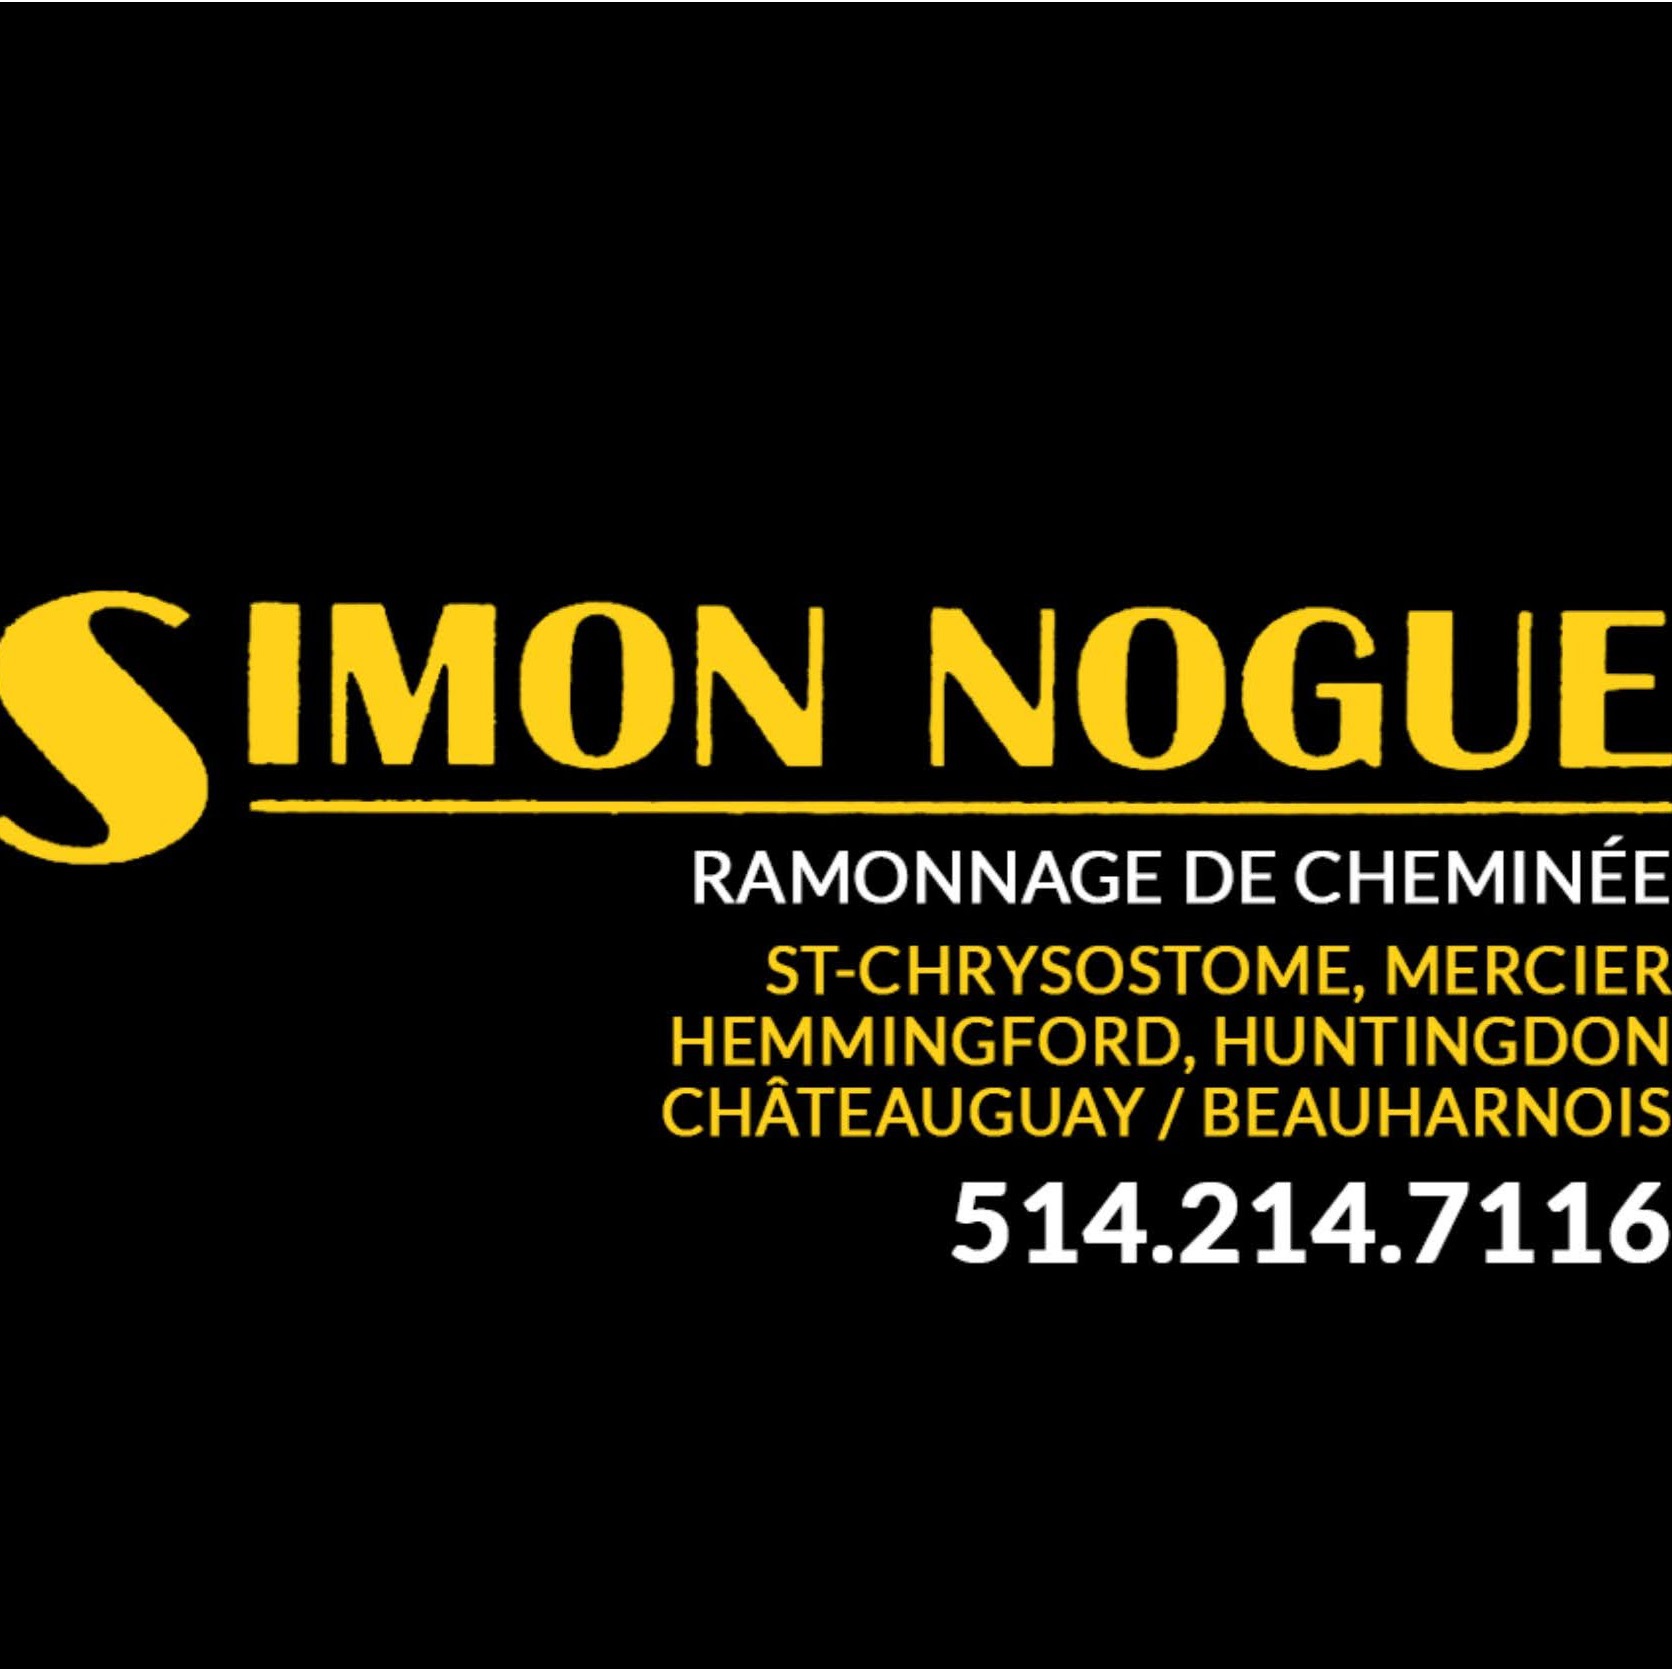 Ramonage Simon Nogue Logo